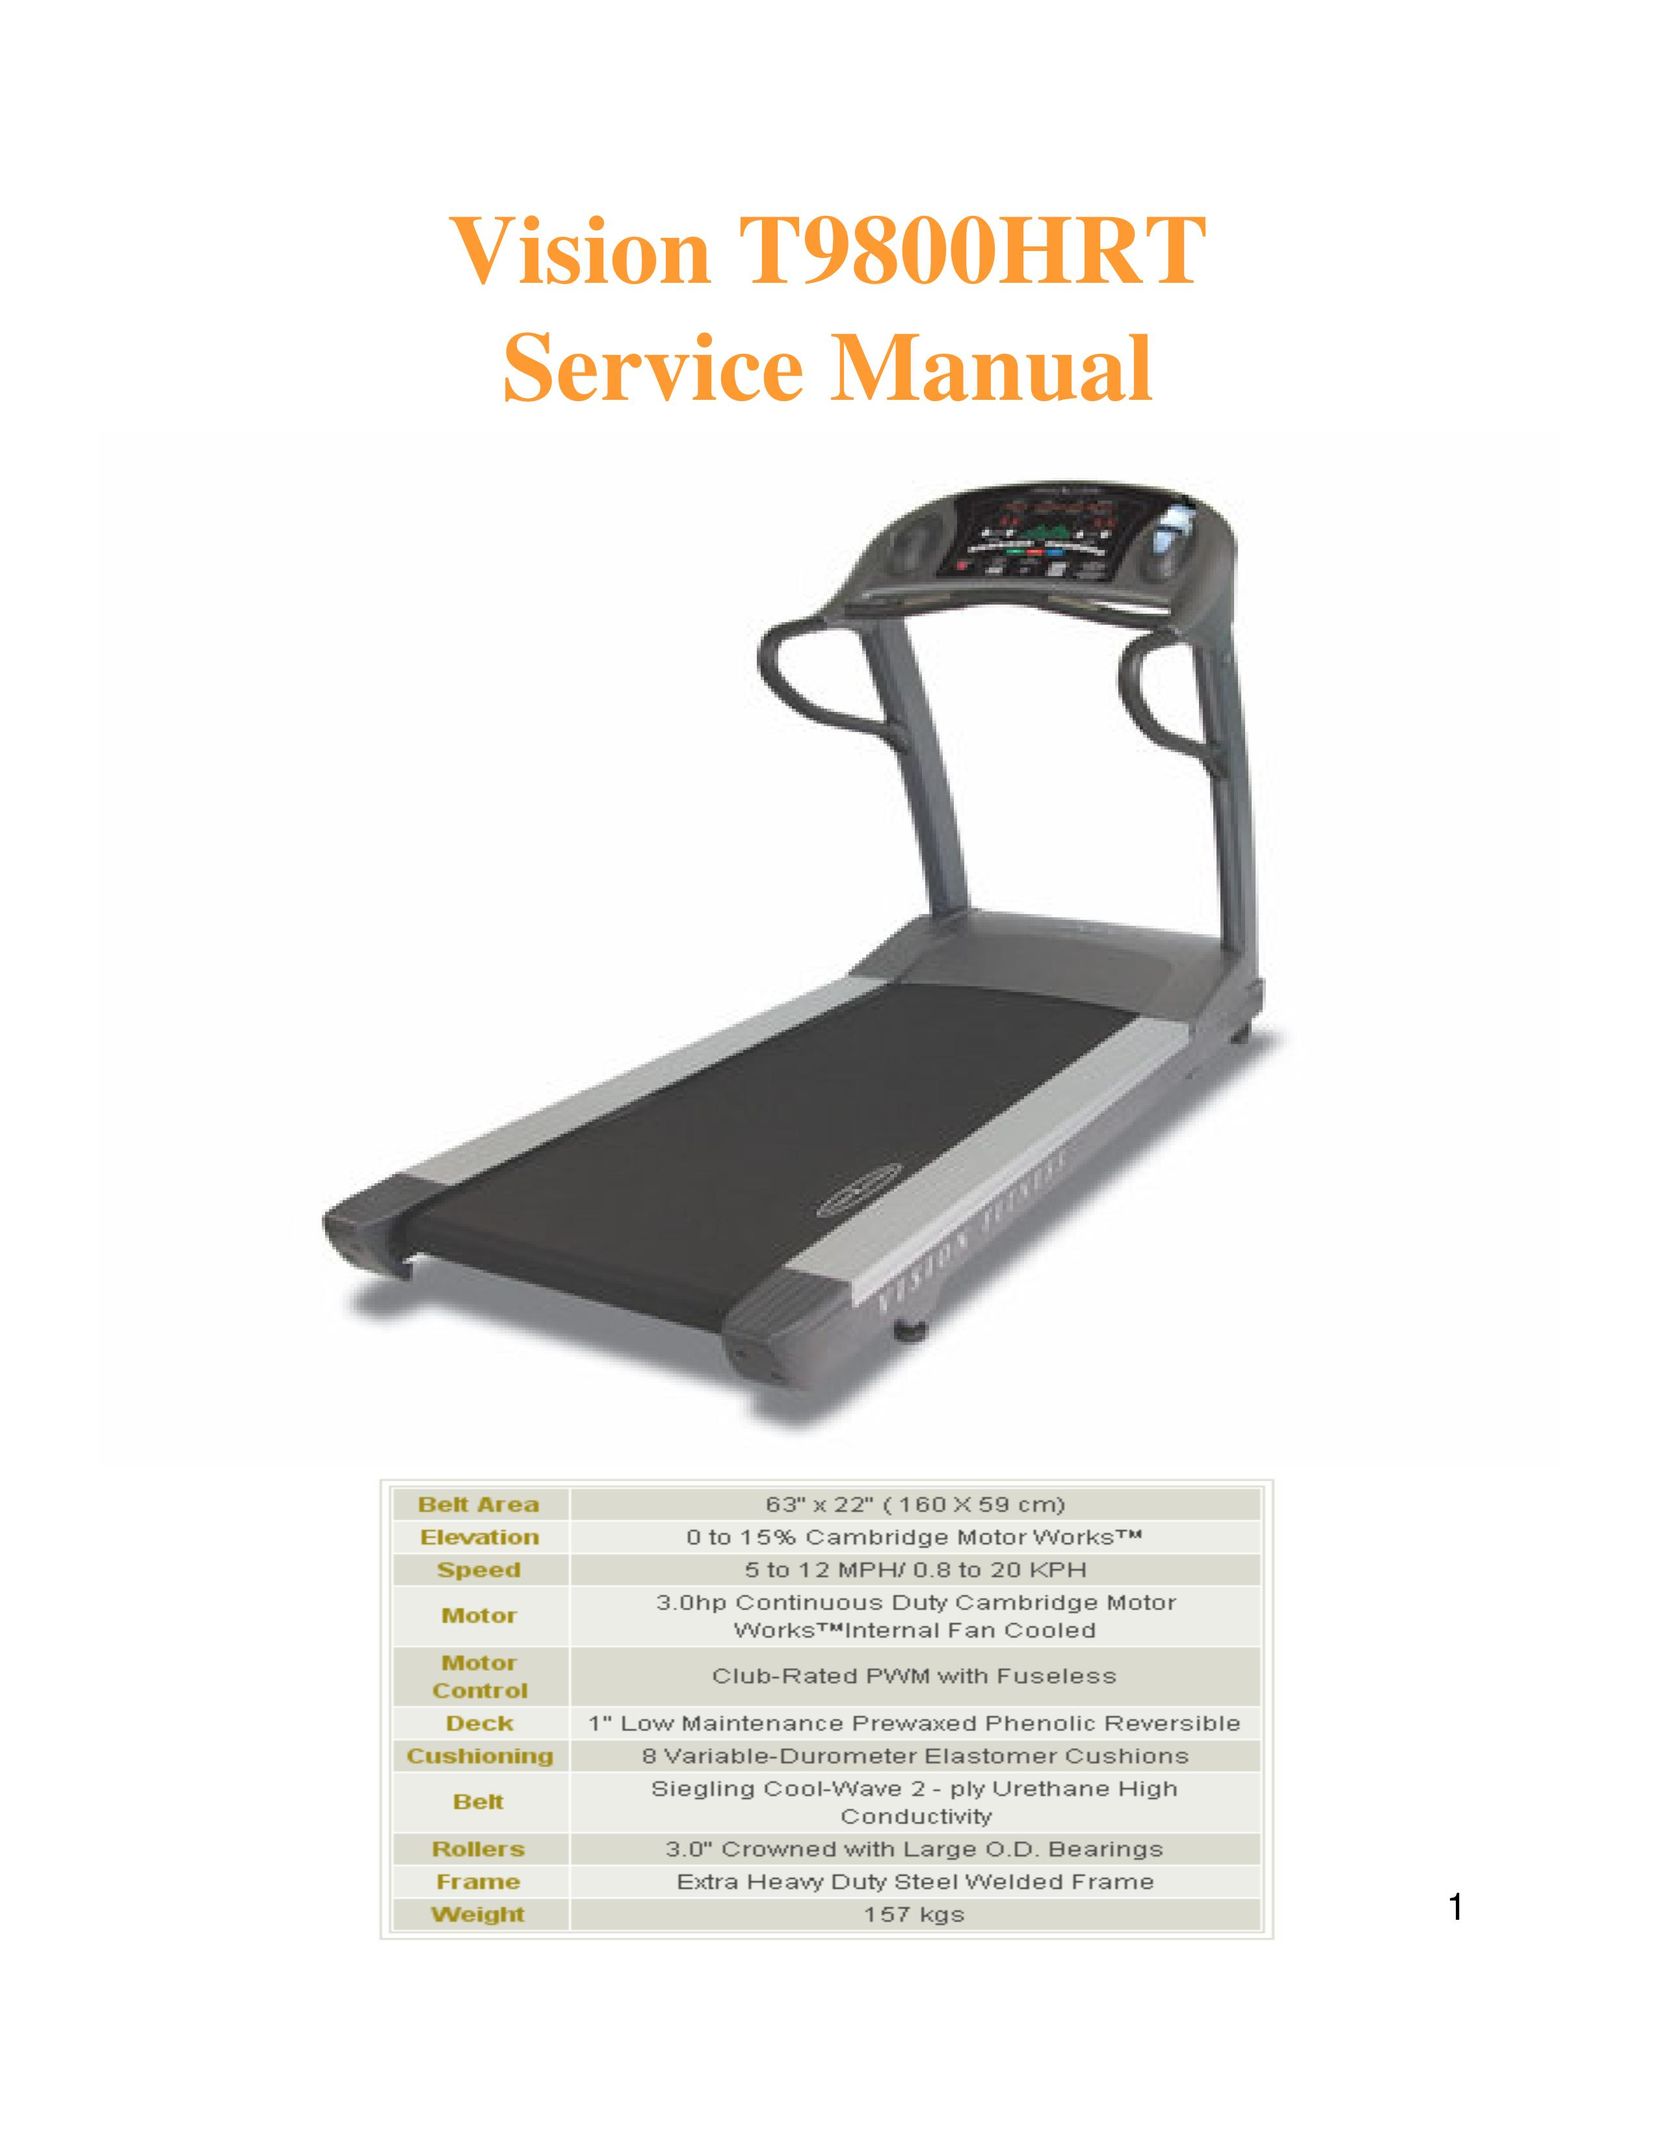 Miele T9800HRT Treadmill User Manual